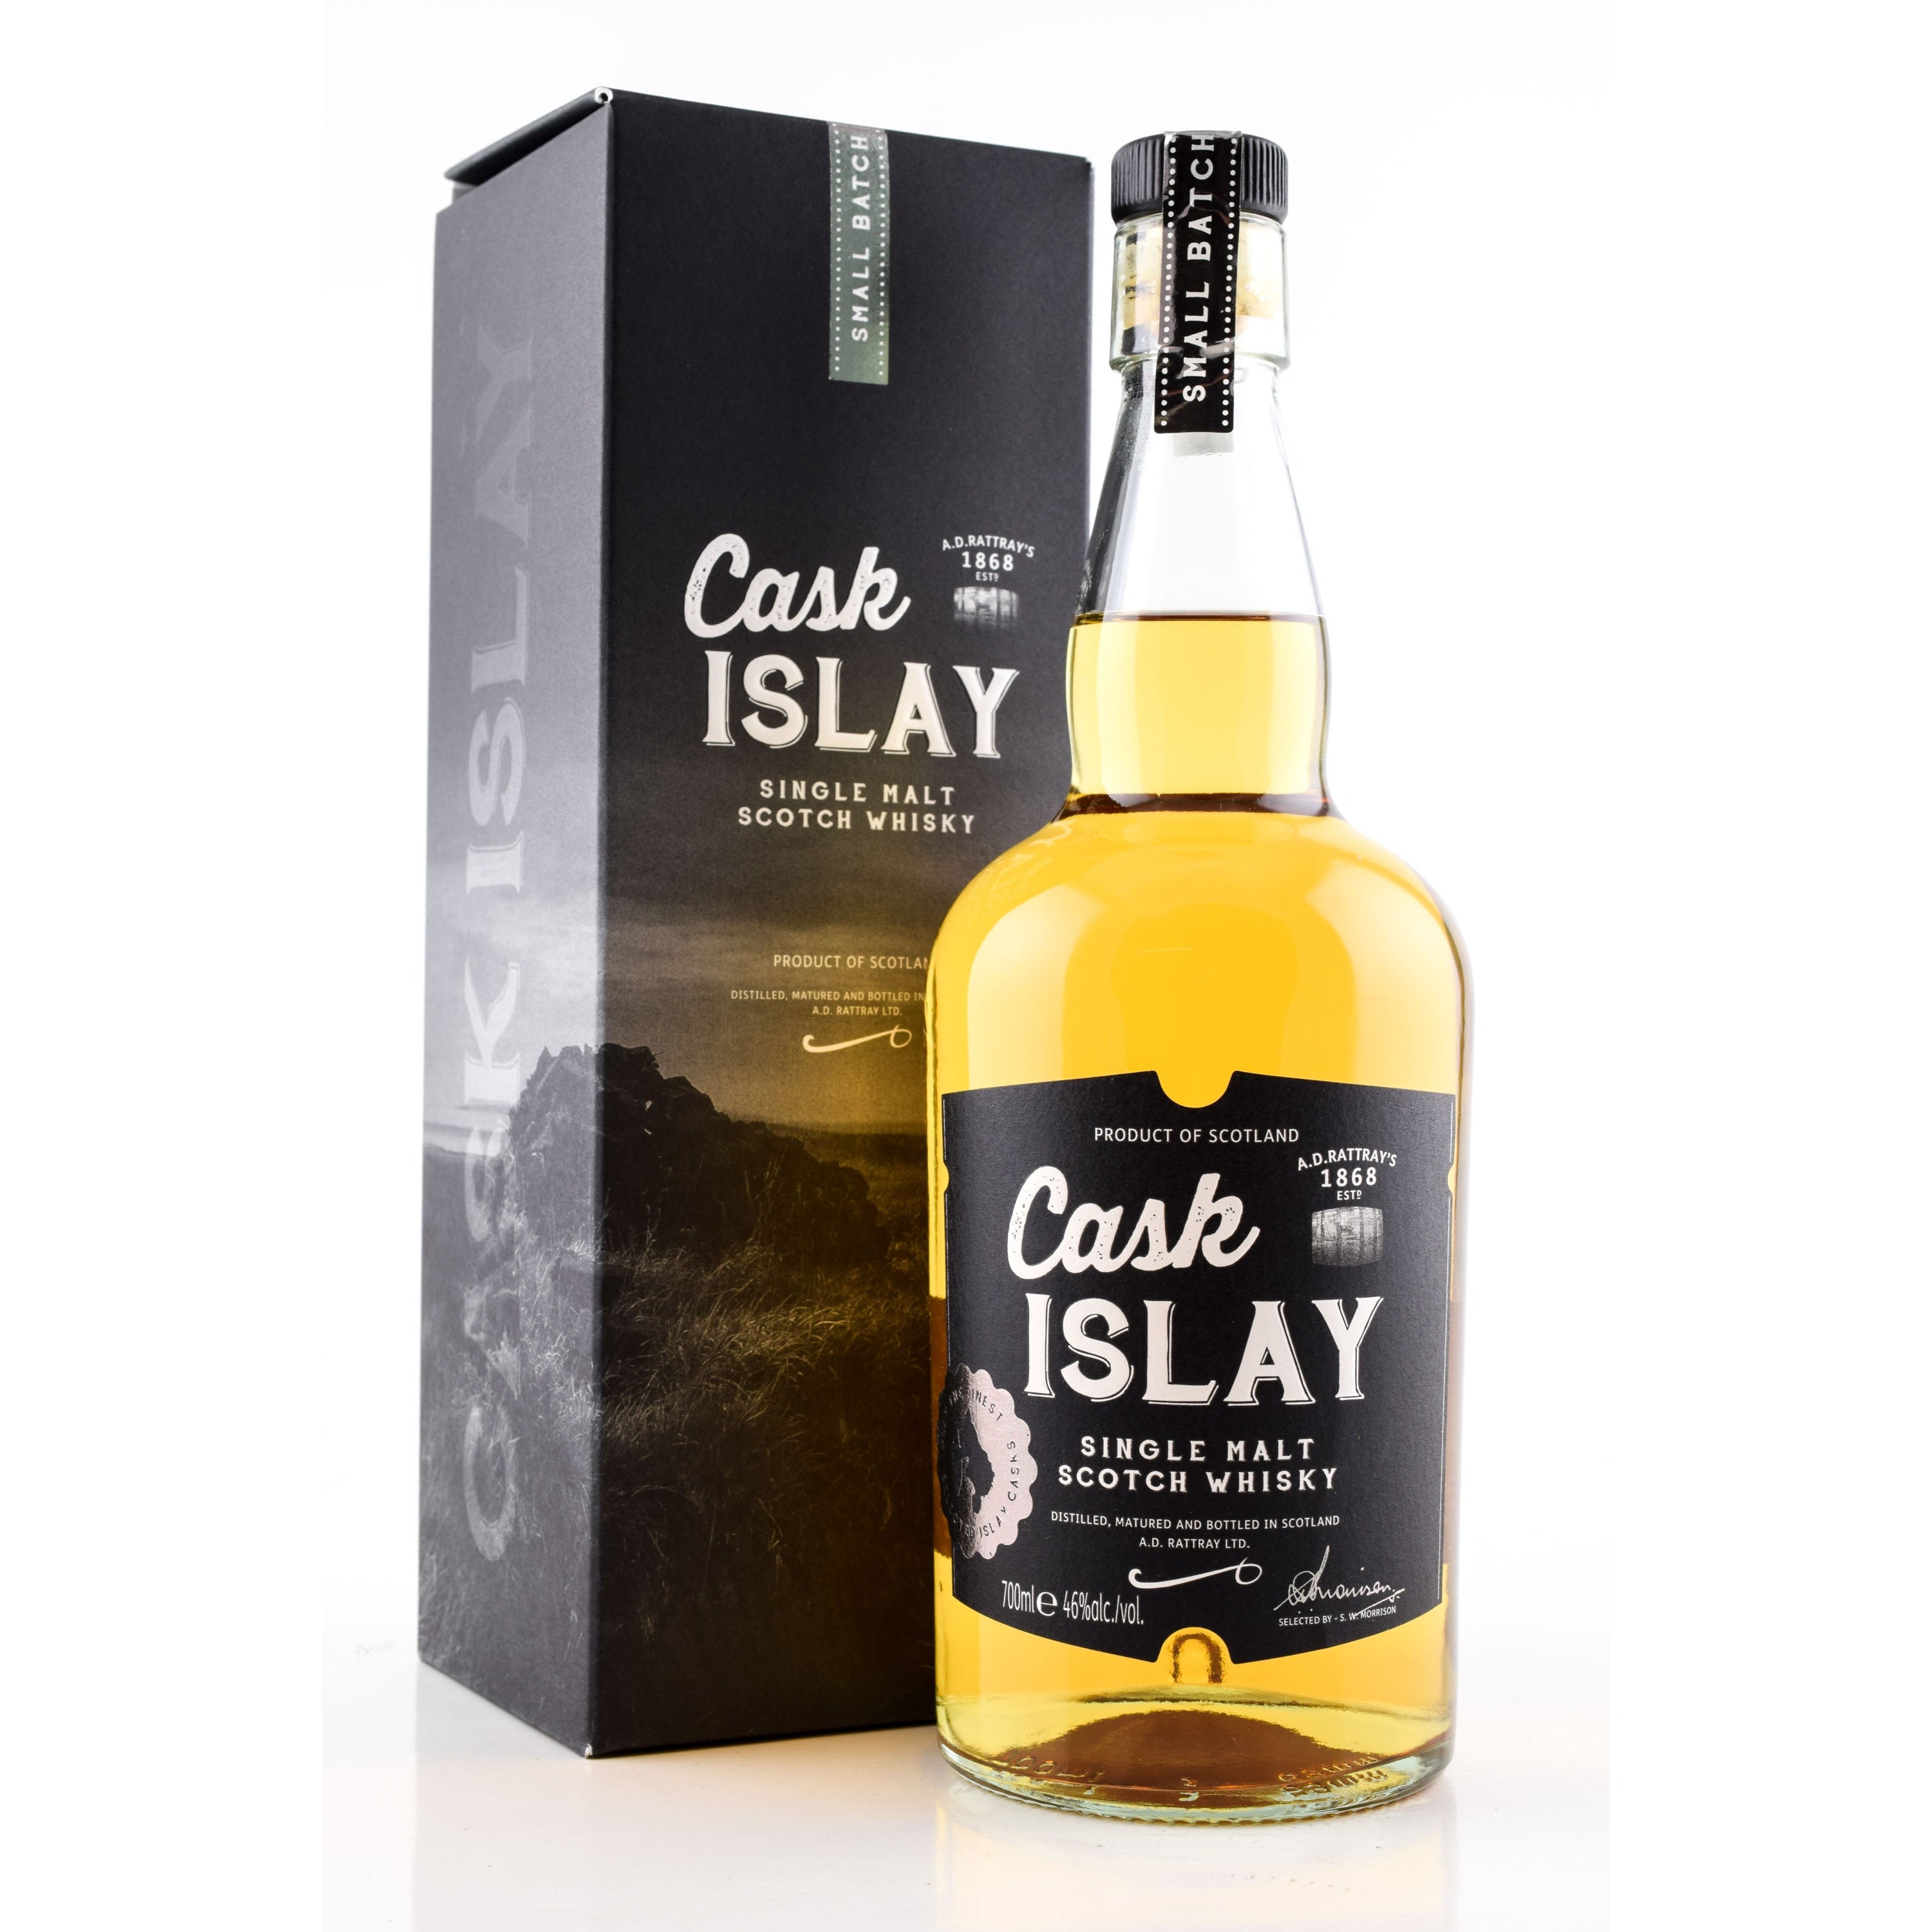 A.D. Rattray Cask ISLAY Single Malt Scotch Whisky 46% Vol. 0,7l in Giftbox